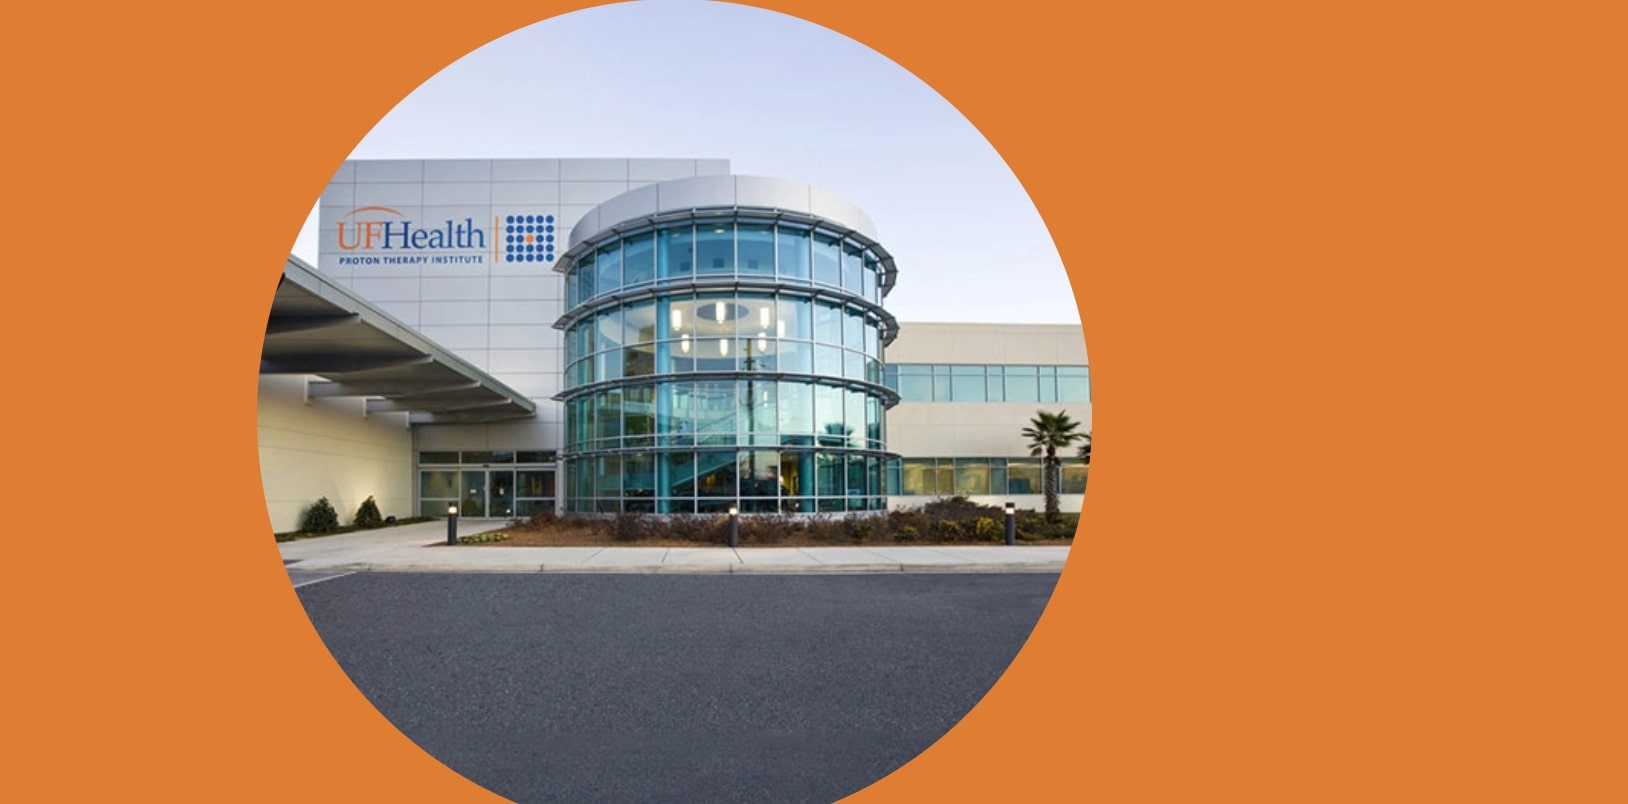 UF Health Proton Therapy Institute located in Jacksonville, Florida